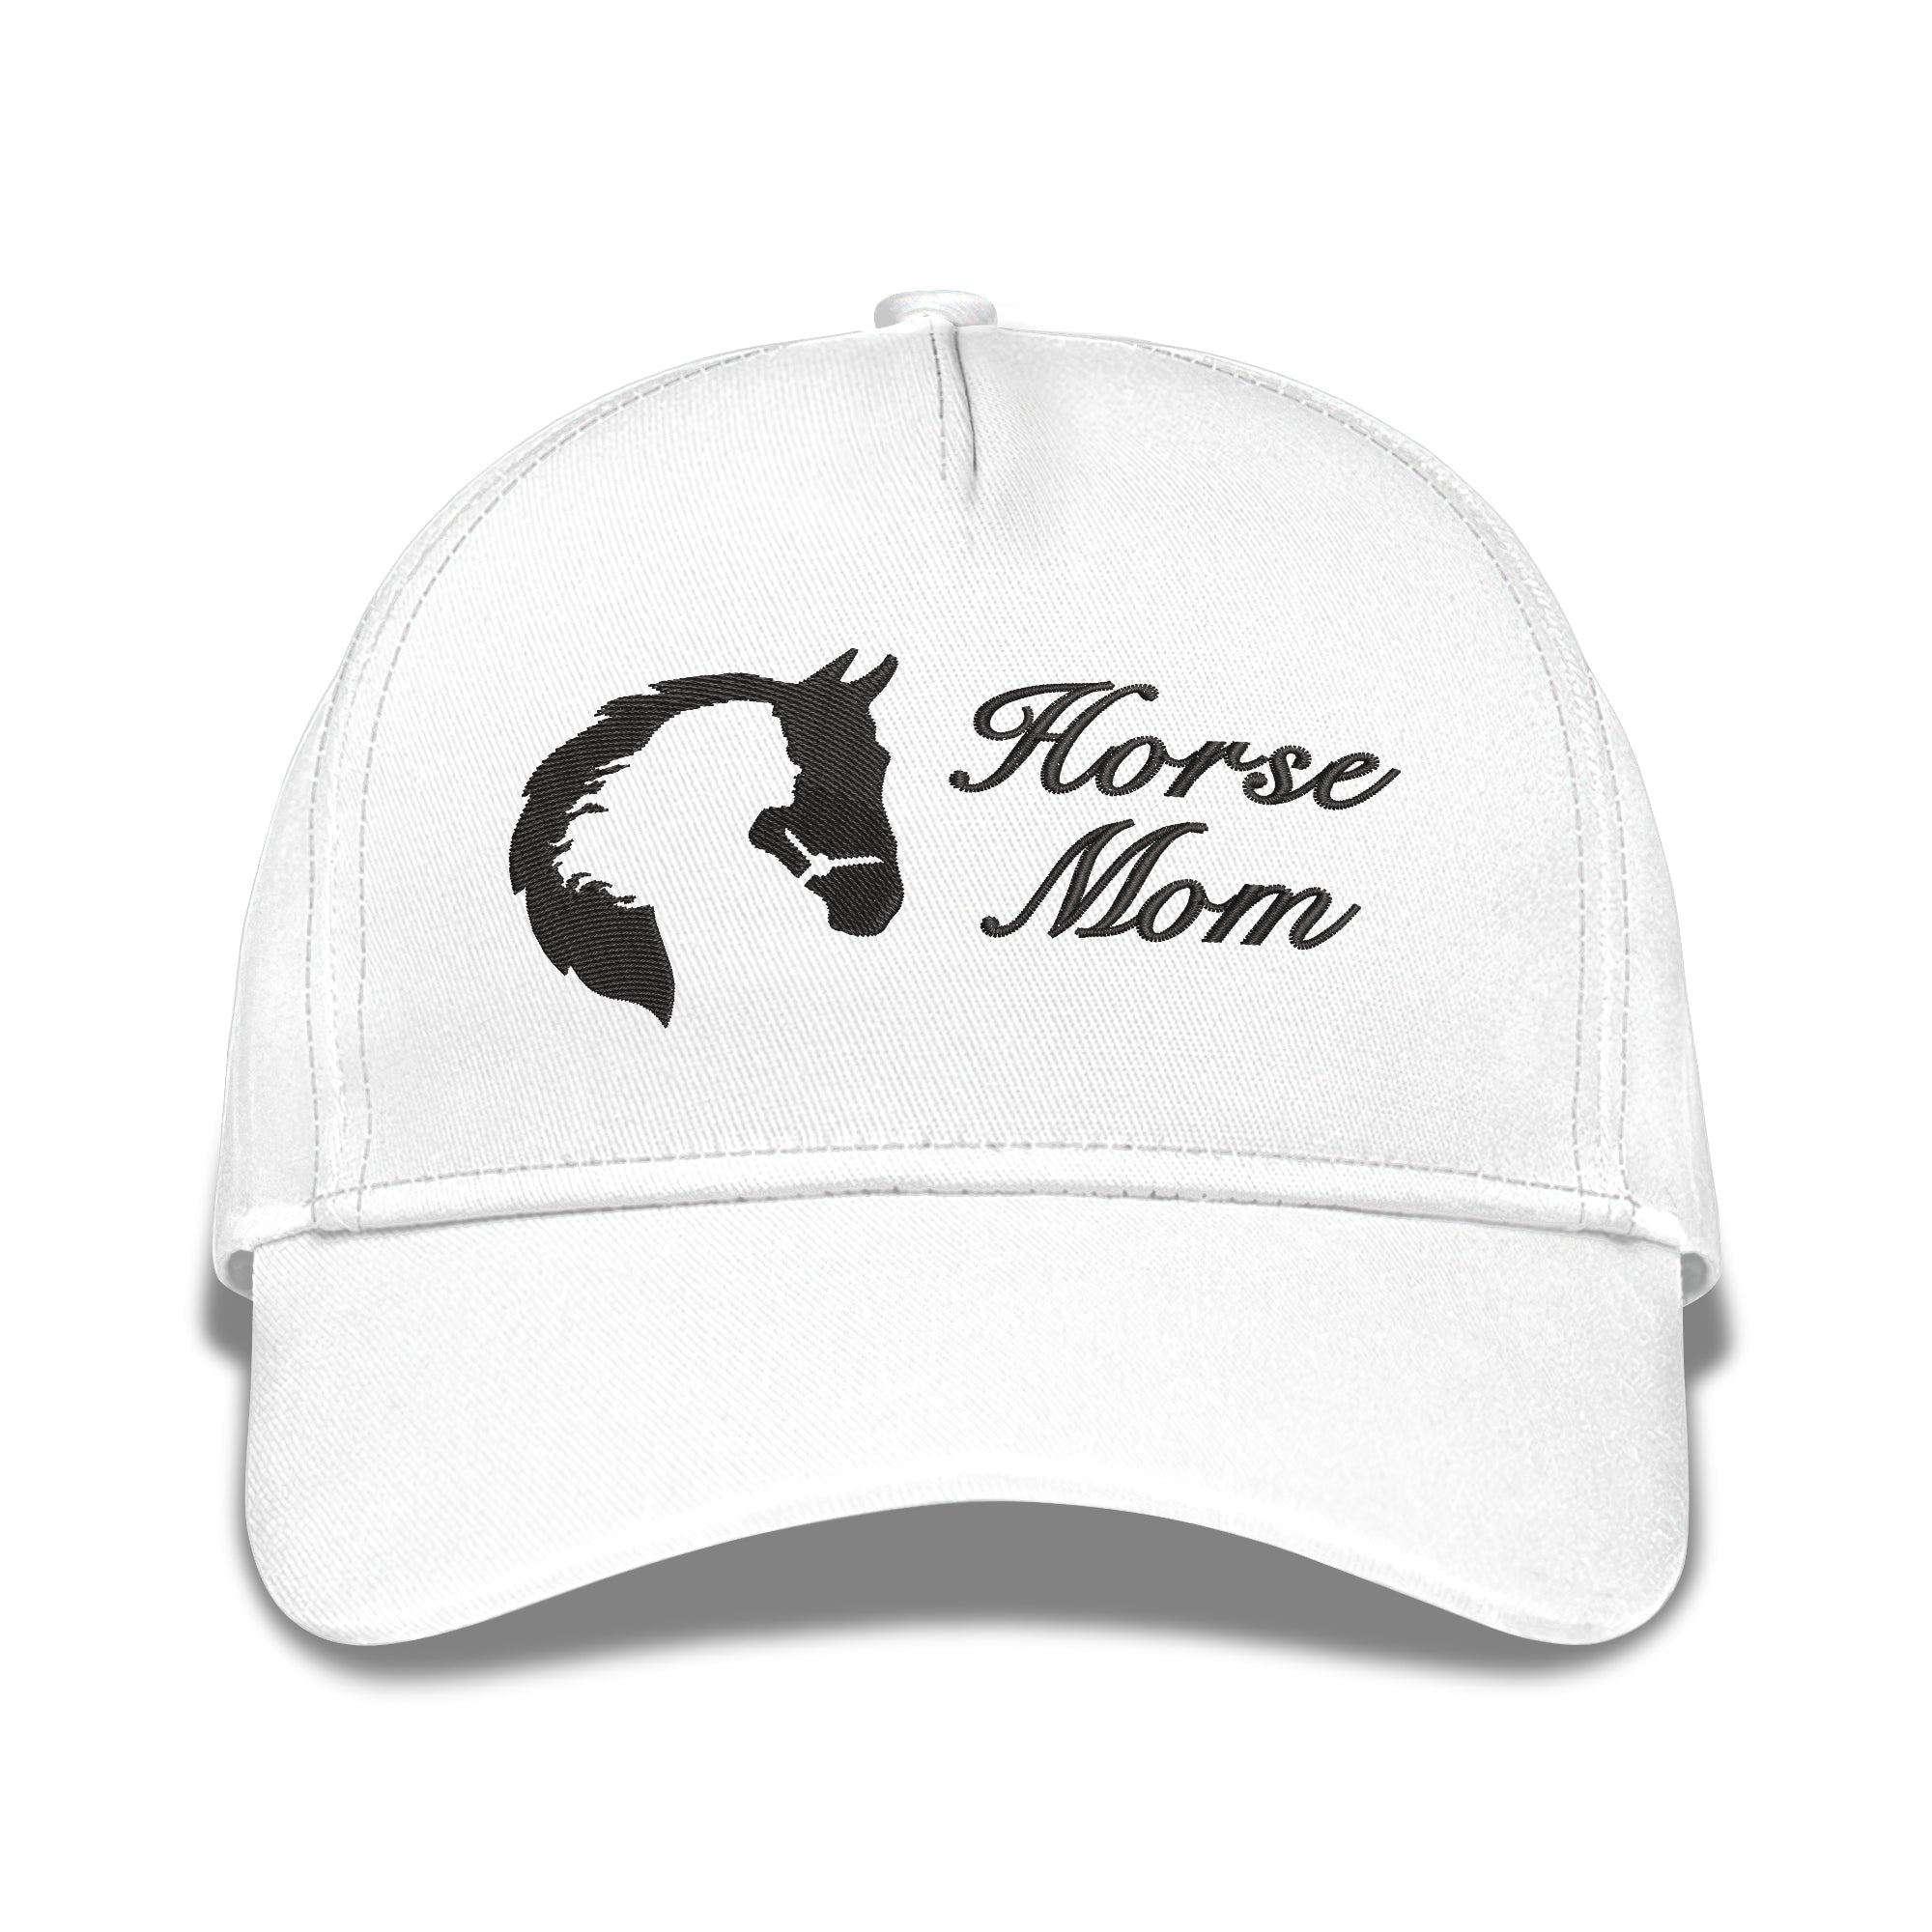 Horse Mom Embroidered Baseball Caps